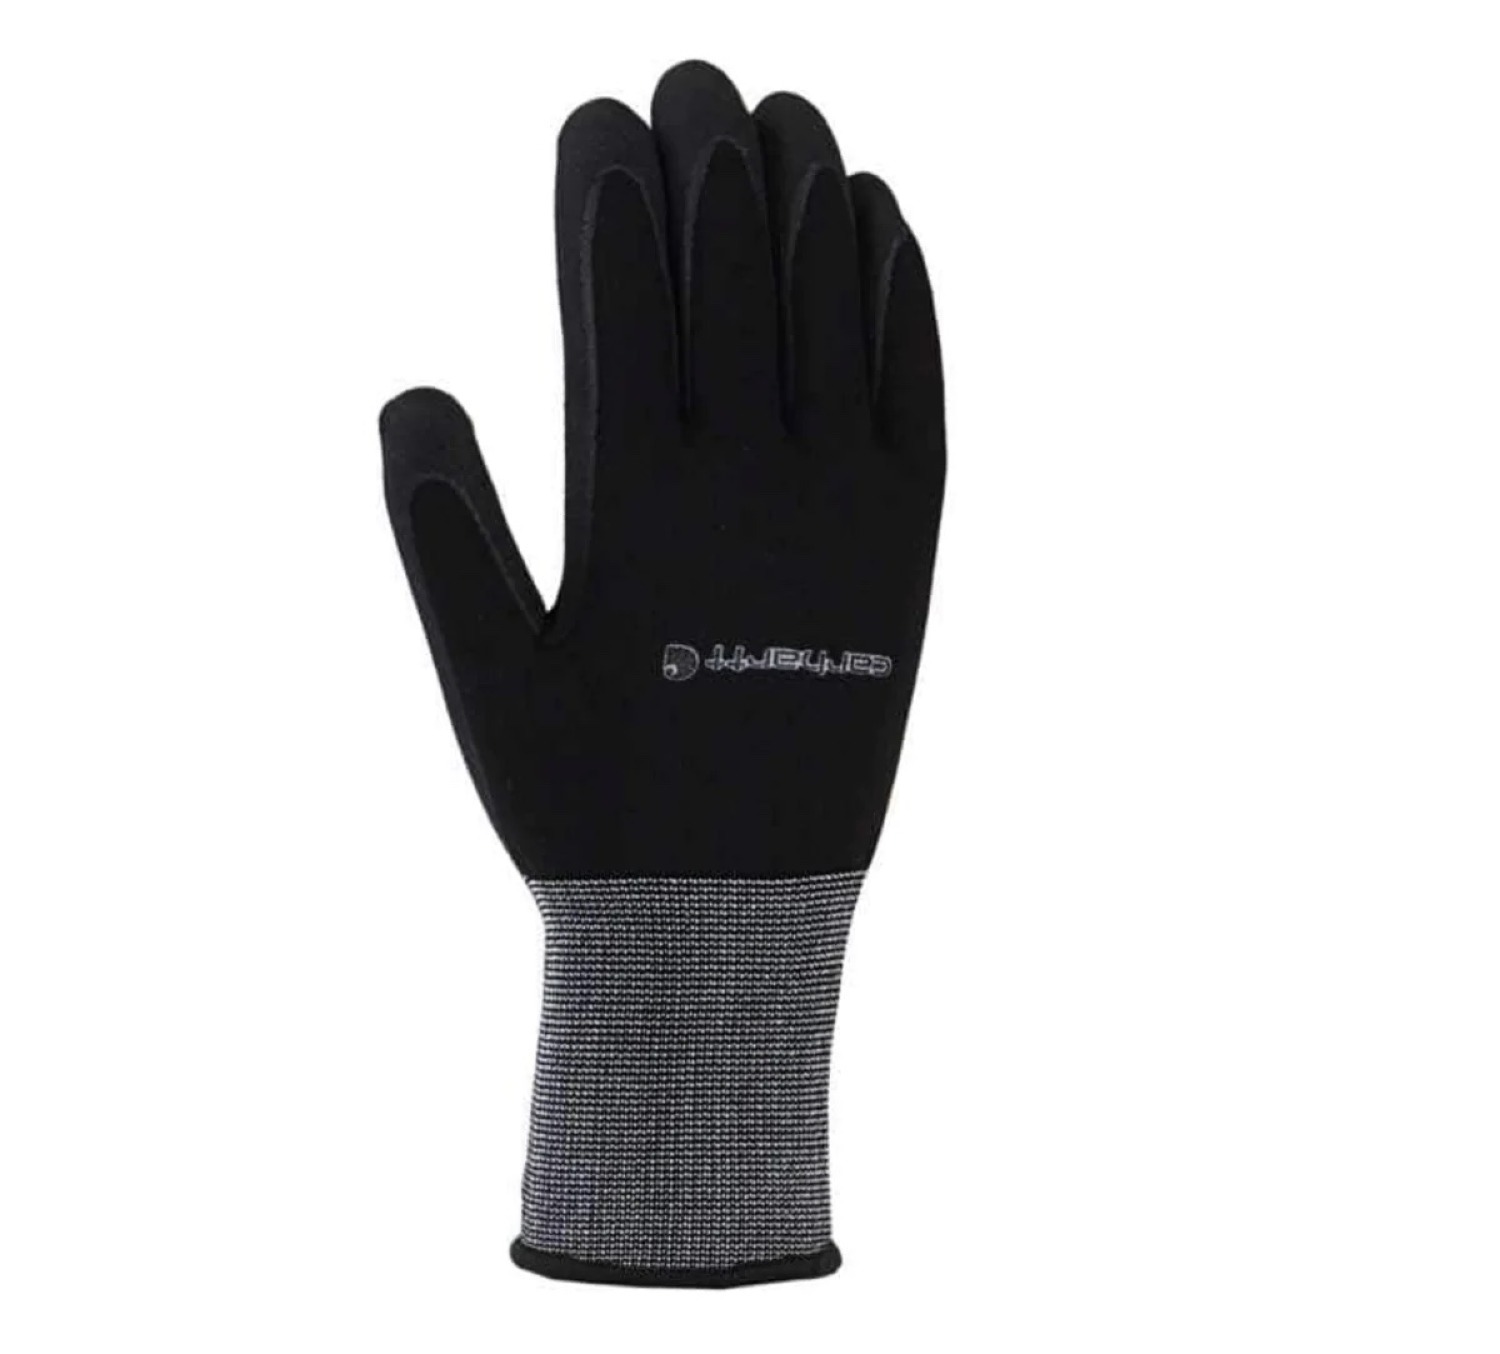 Carhartt All Purpose Nitrile Grip Gloves $6, Carhartt Men's Impact C-Grip Gloves $12.74 & More + Free Shipping